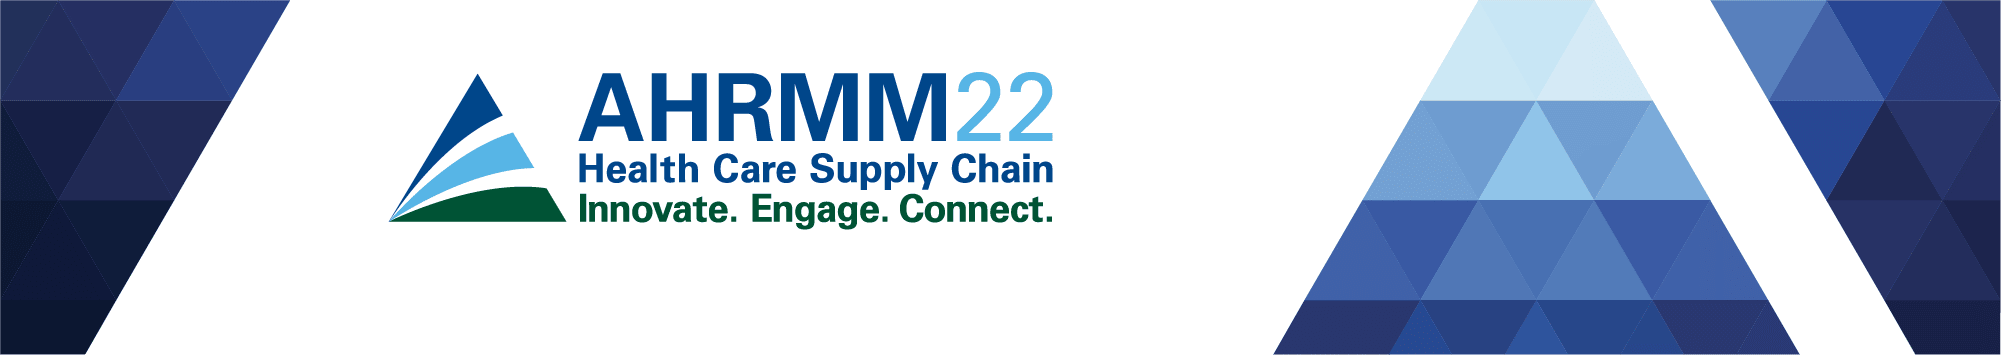 AHRMM22 Healthcare Supply Chain Exhibition